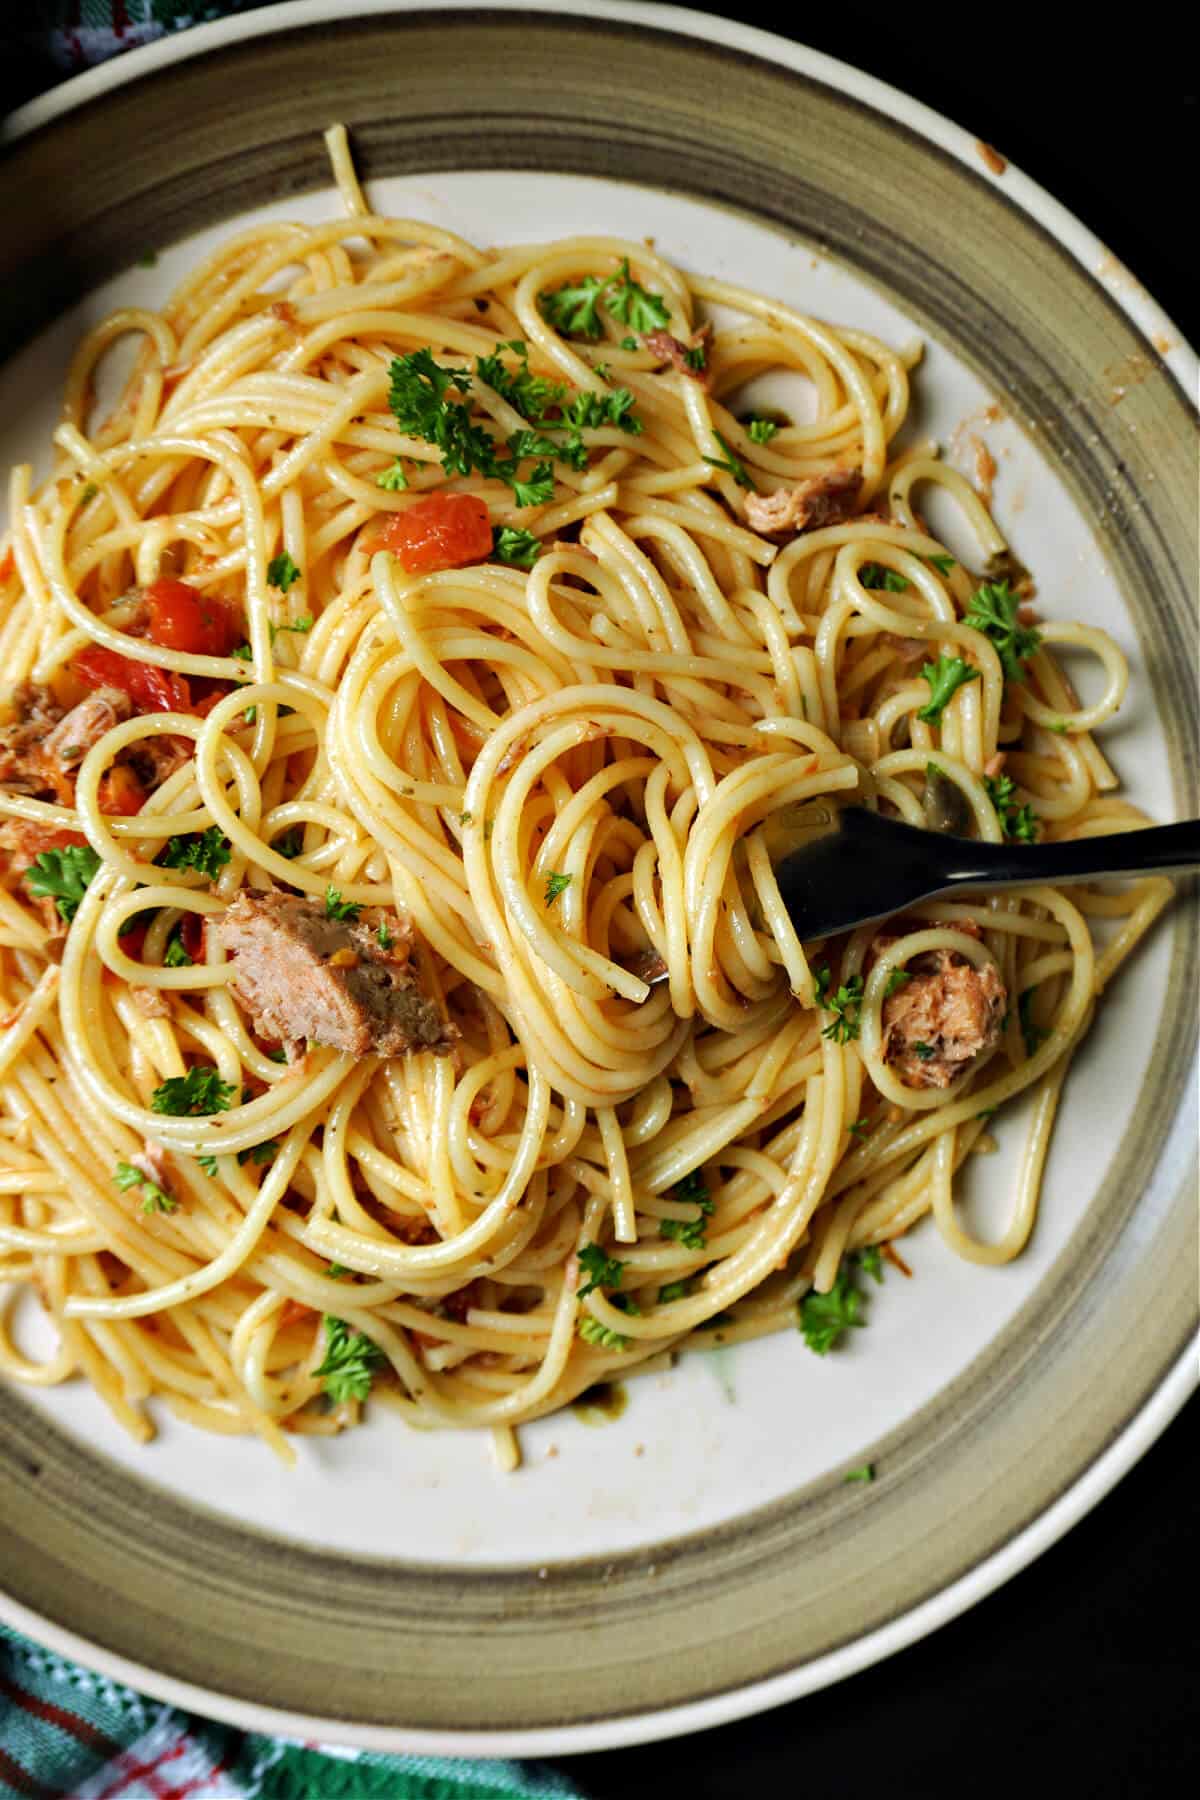 A plate with tuna spaghetti and a fork.